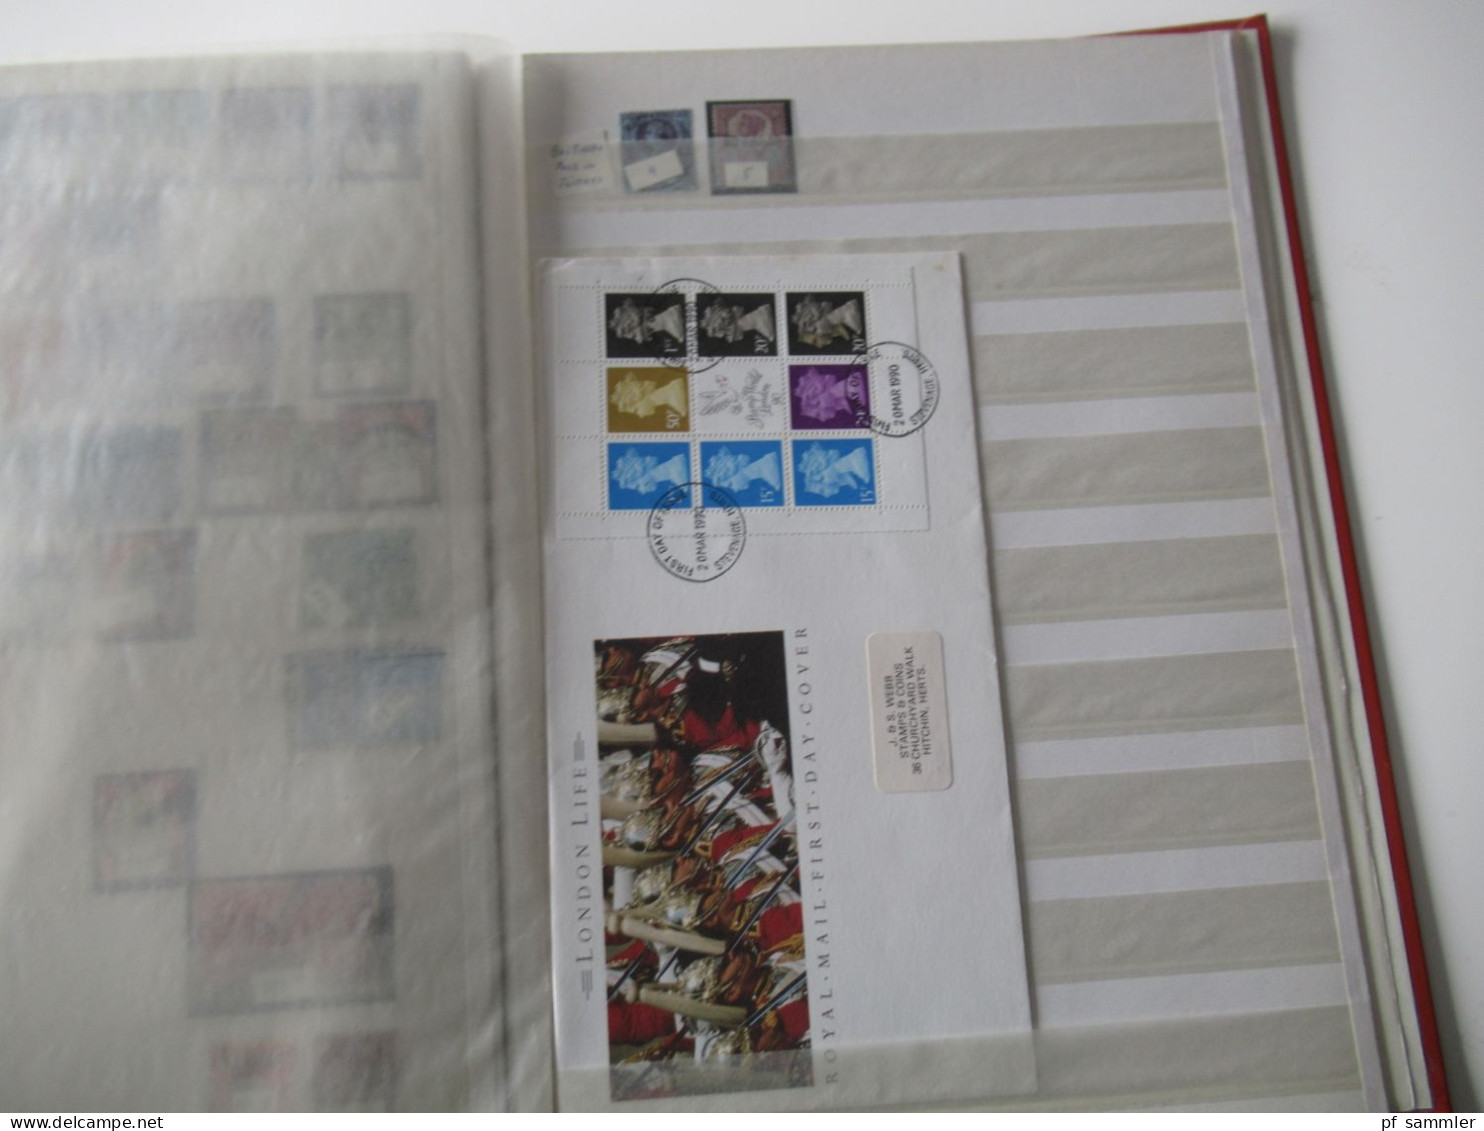 Sammlung / interessantes Album / Lagerbuch Europa GB ab Penny Black - 1991 tausende gestempelte Marken / Fundgrube!